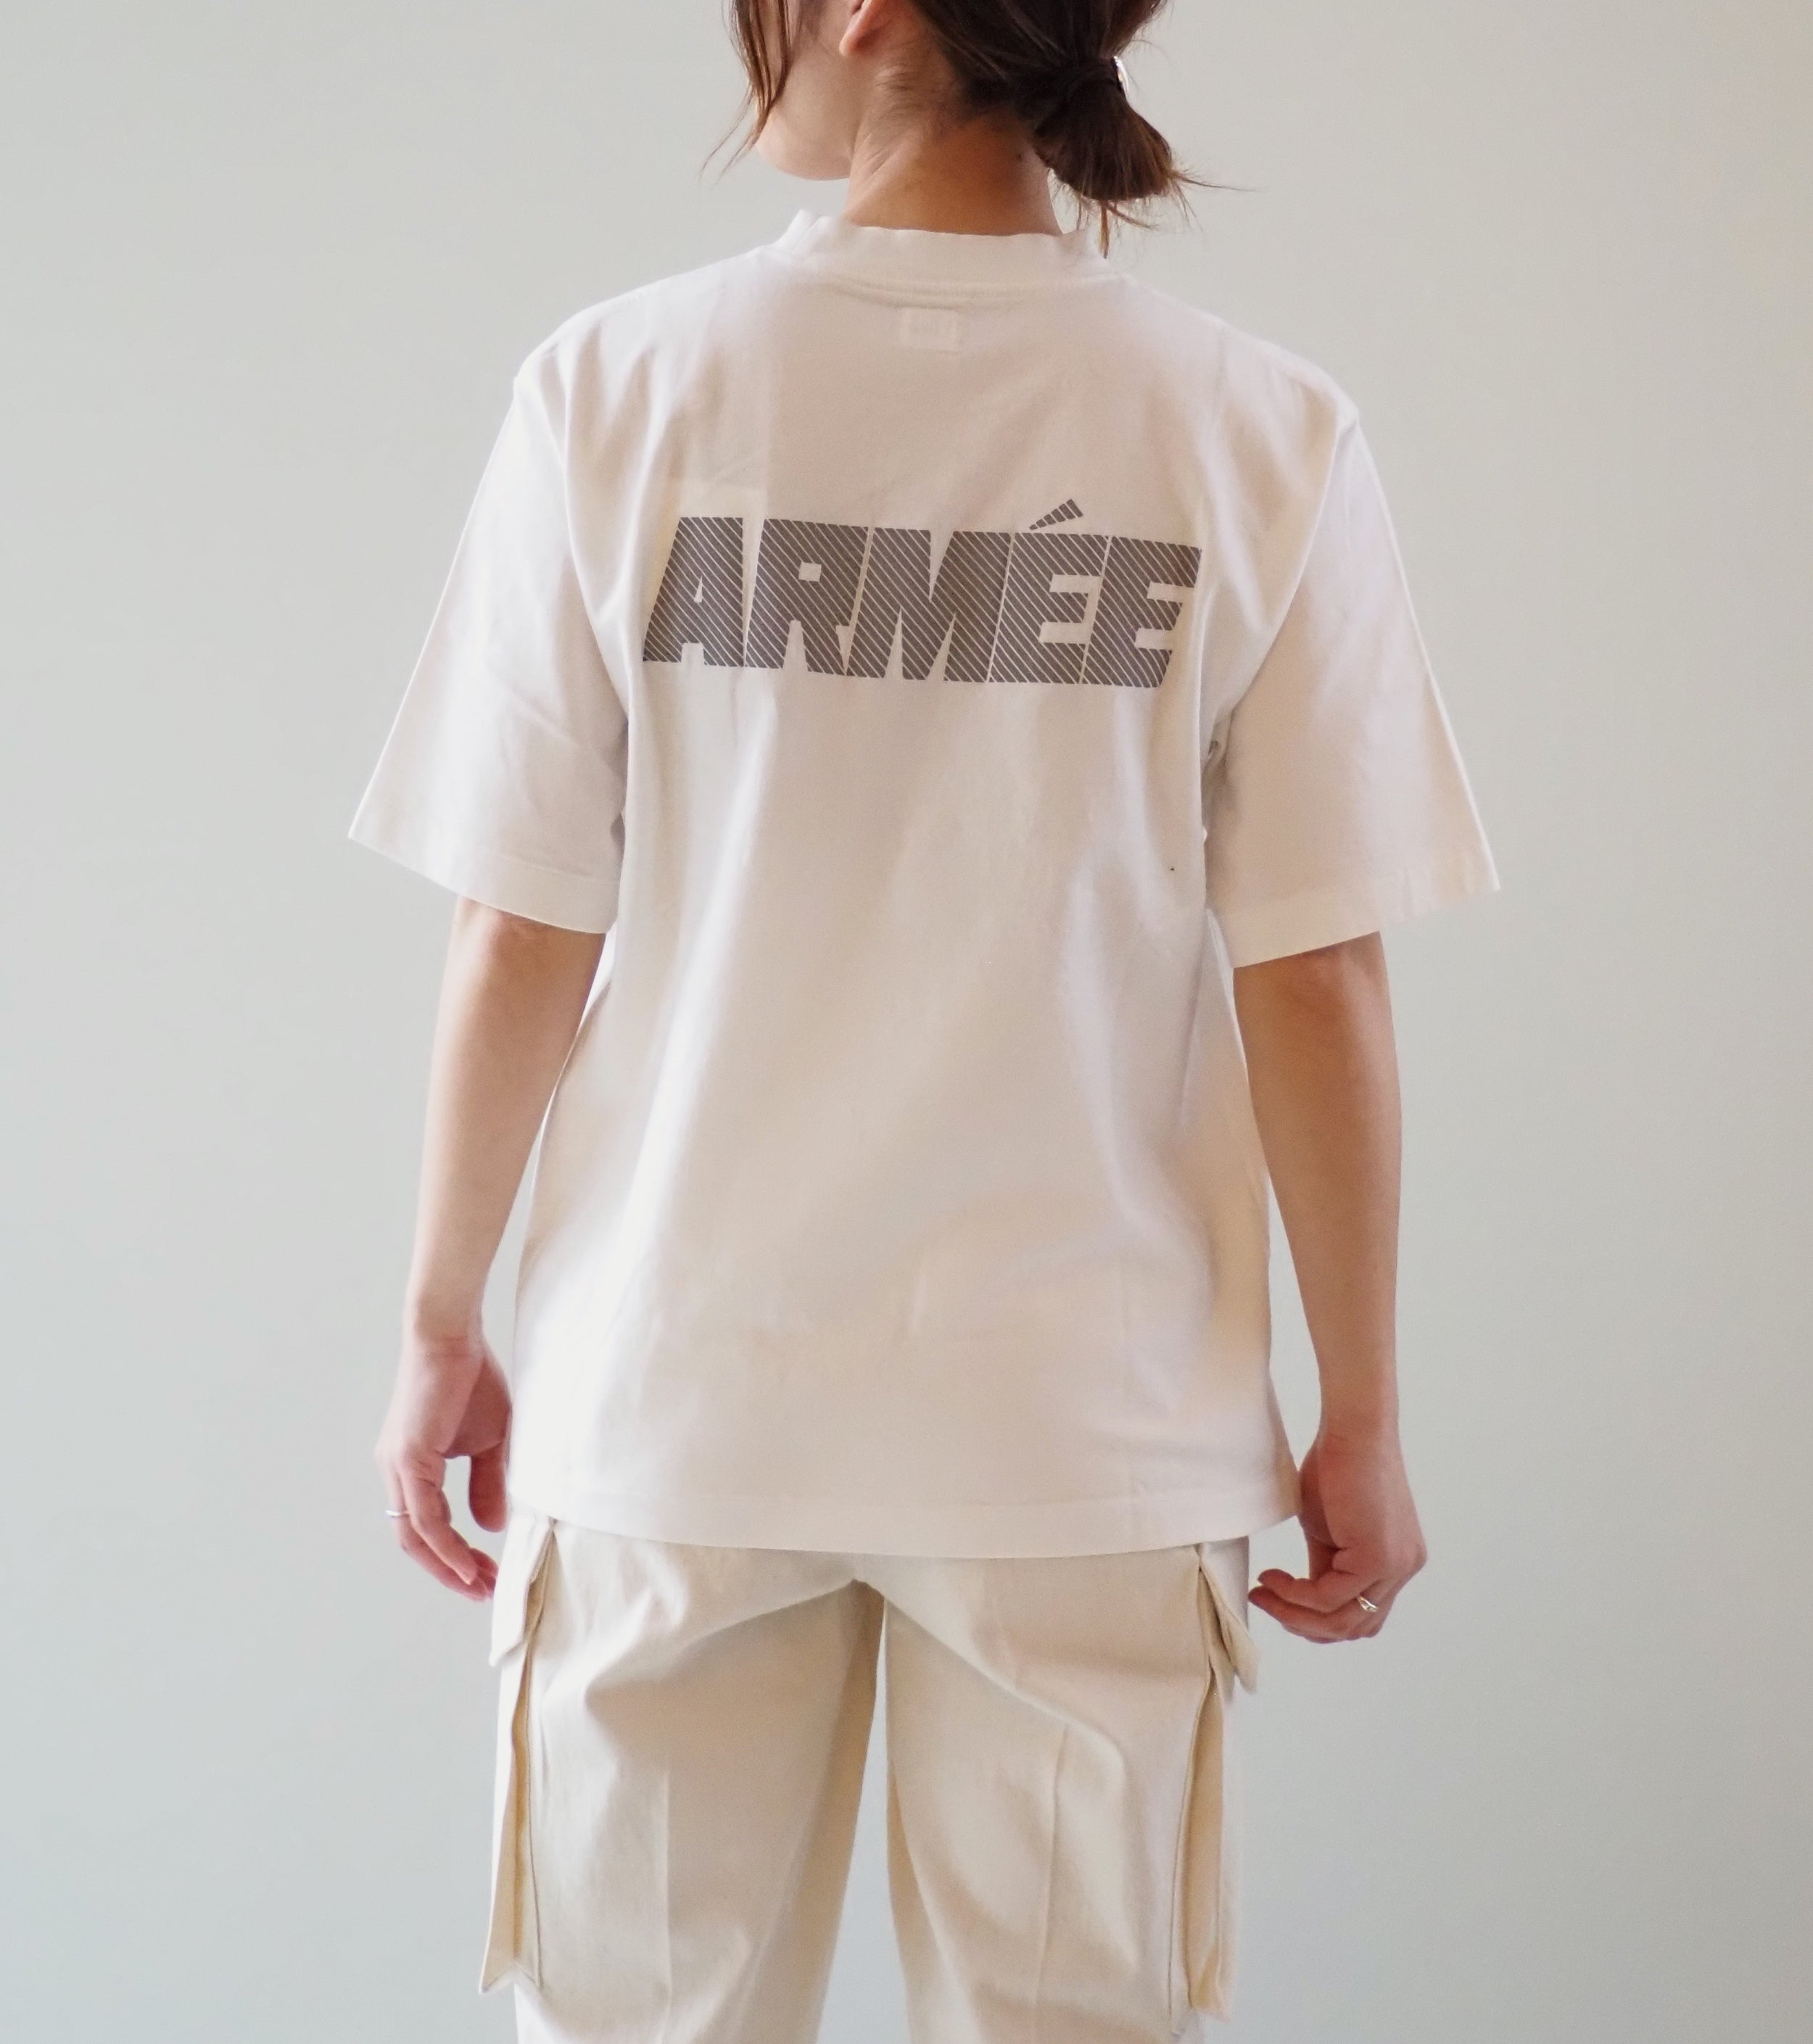 blurhms ROOT STOCK ARMEE Print Tshirt Standard, White